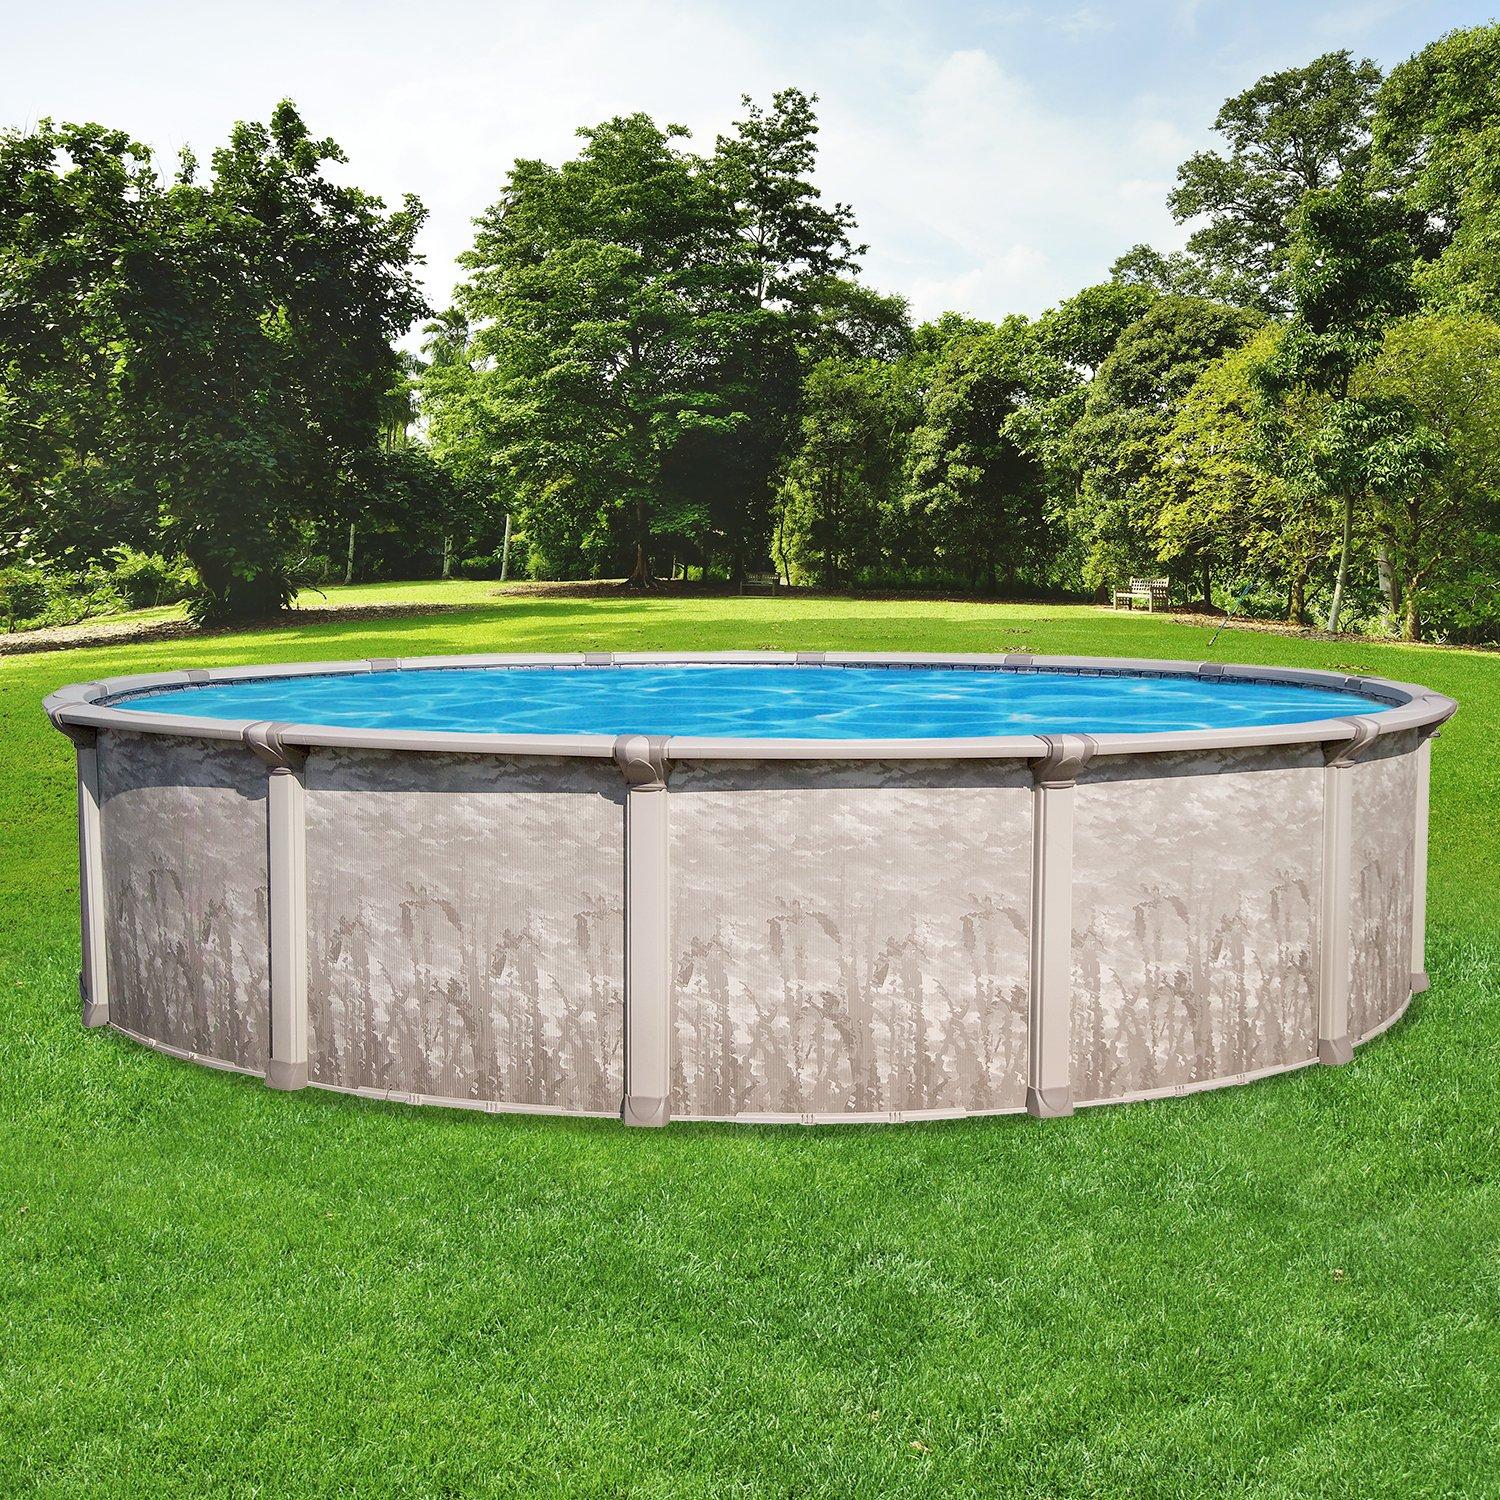 What's your poolside essential? @meghannstephenson packs LES